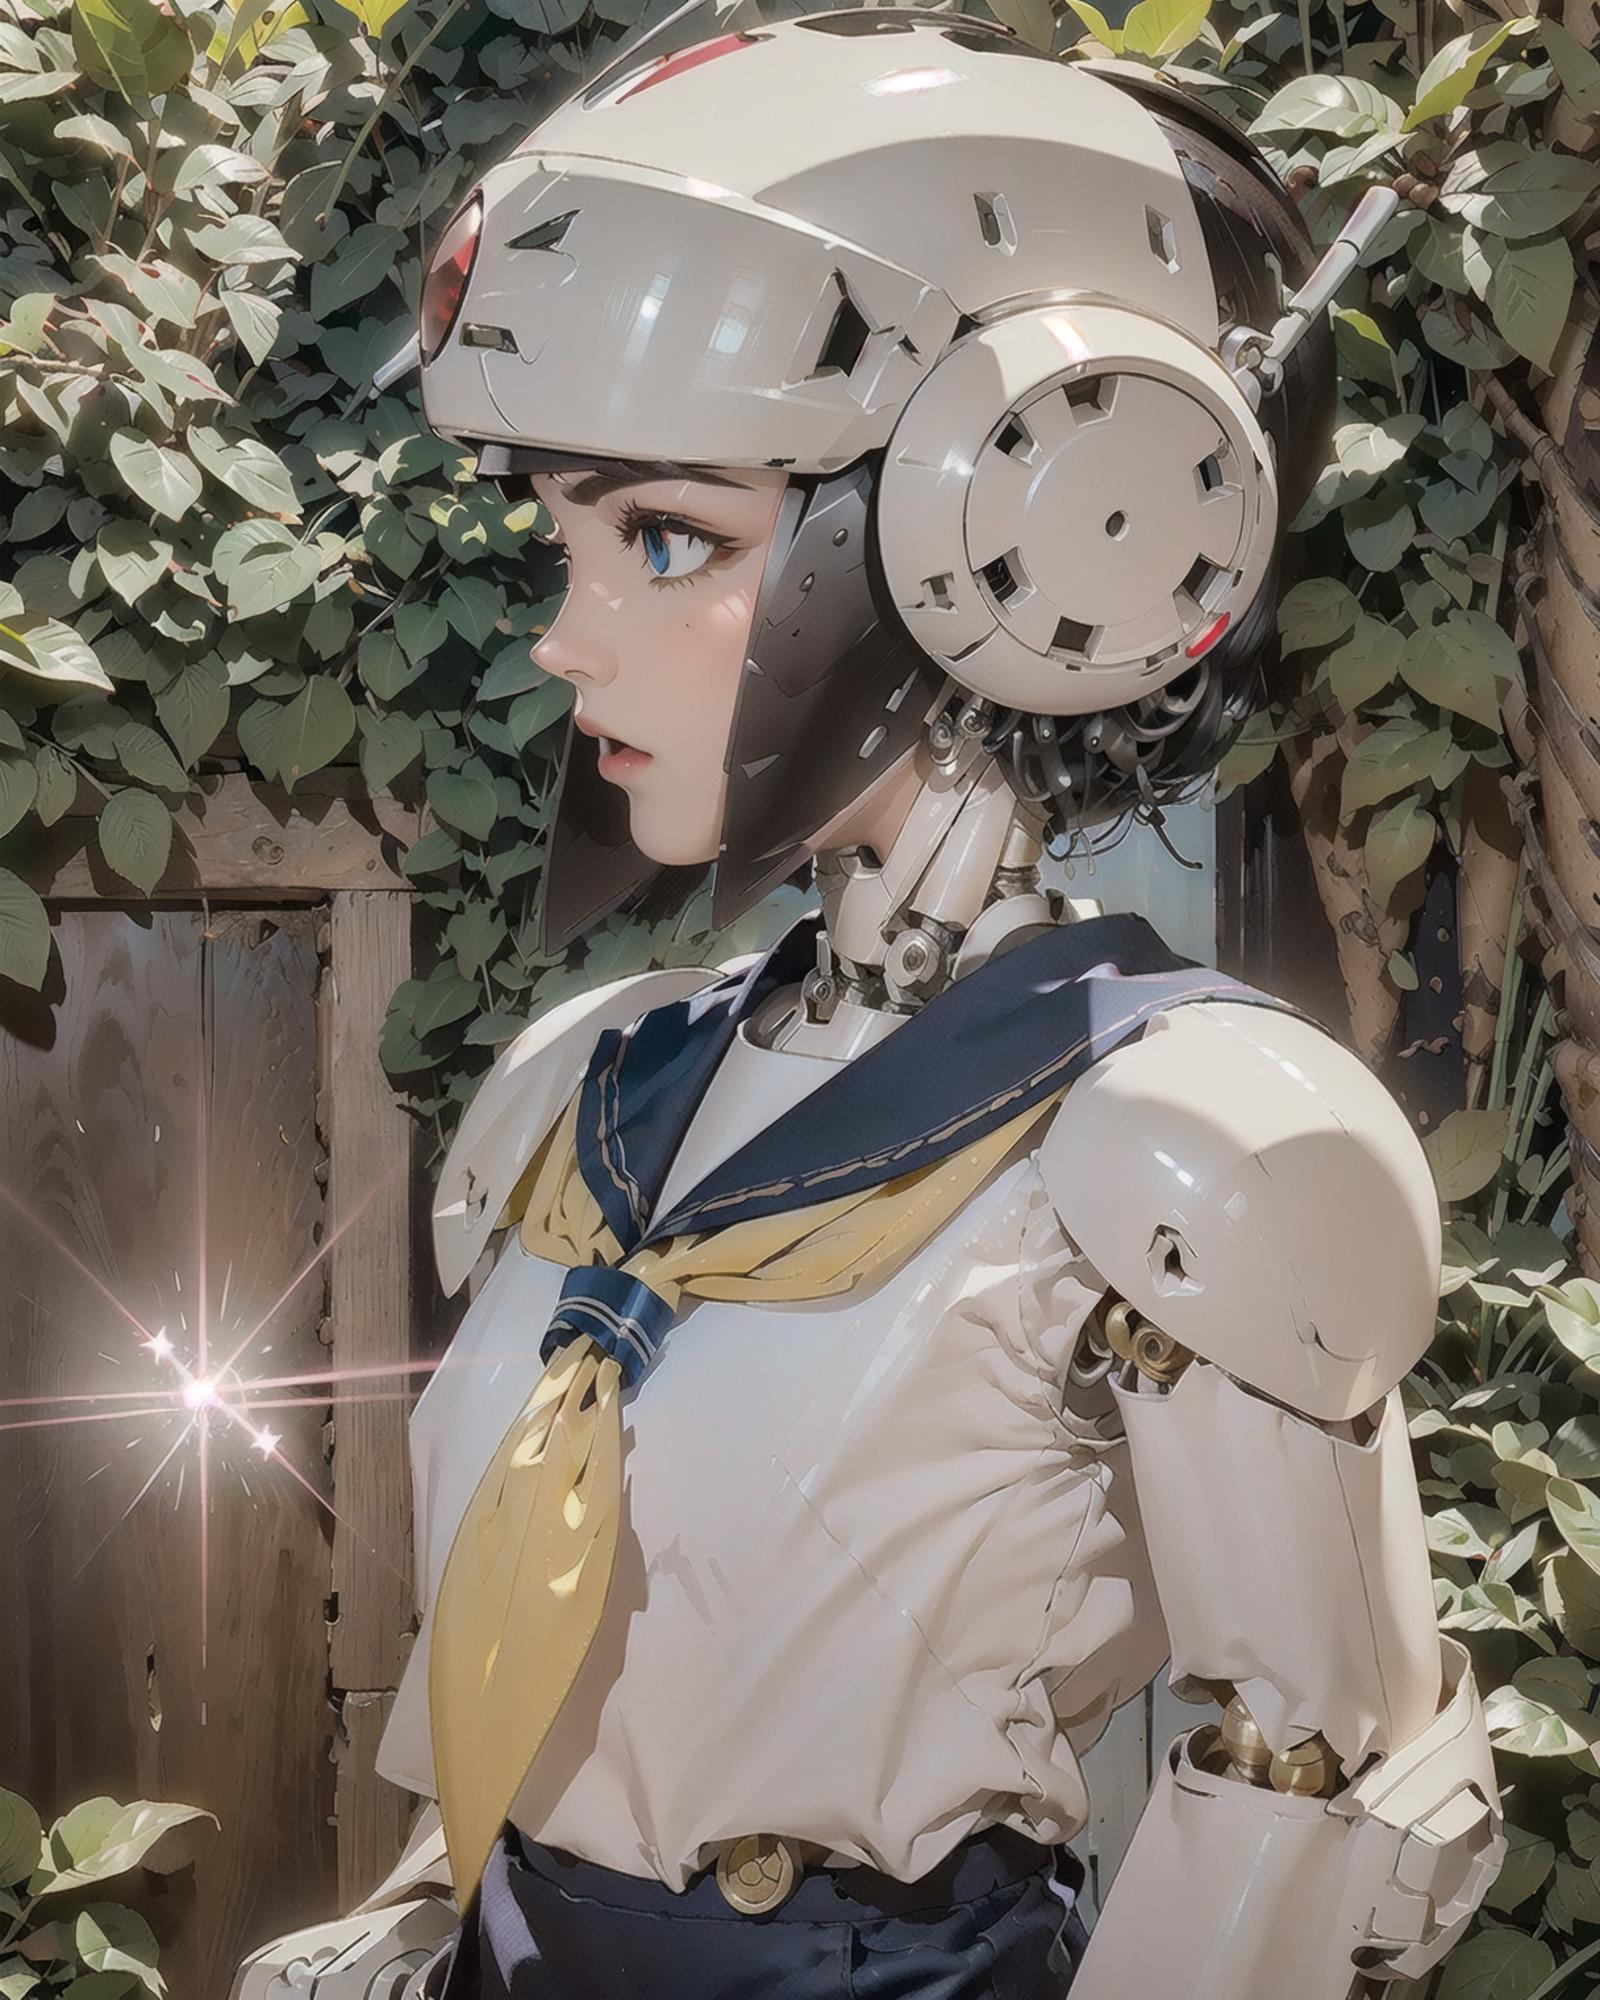 AI model image by Ashimori